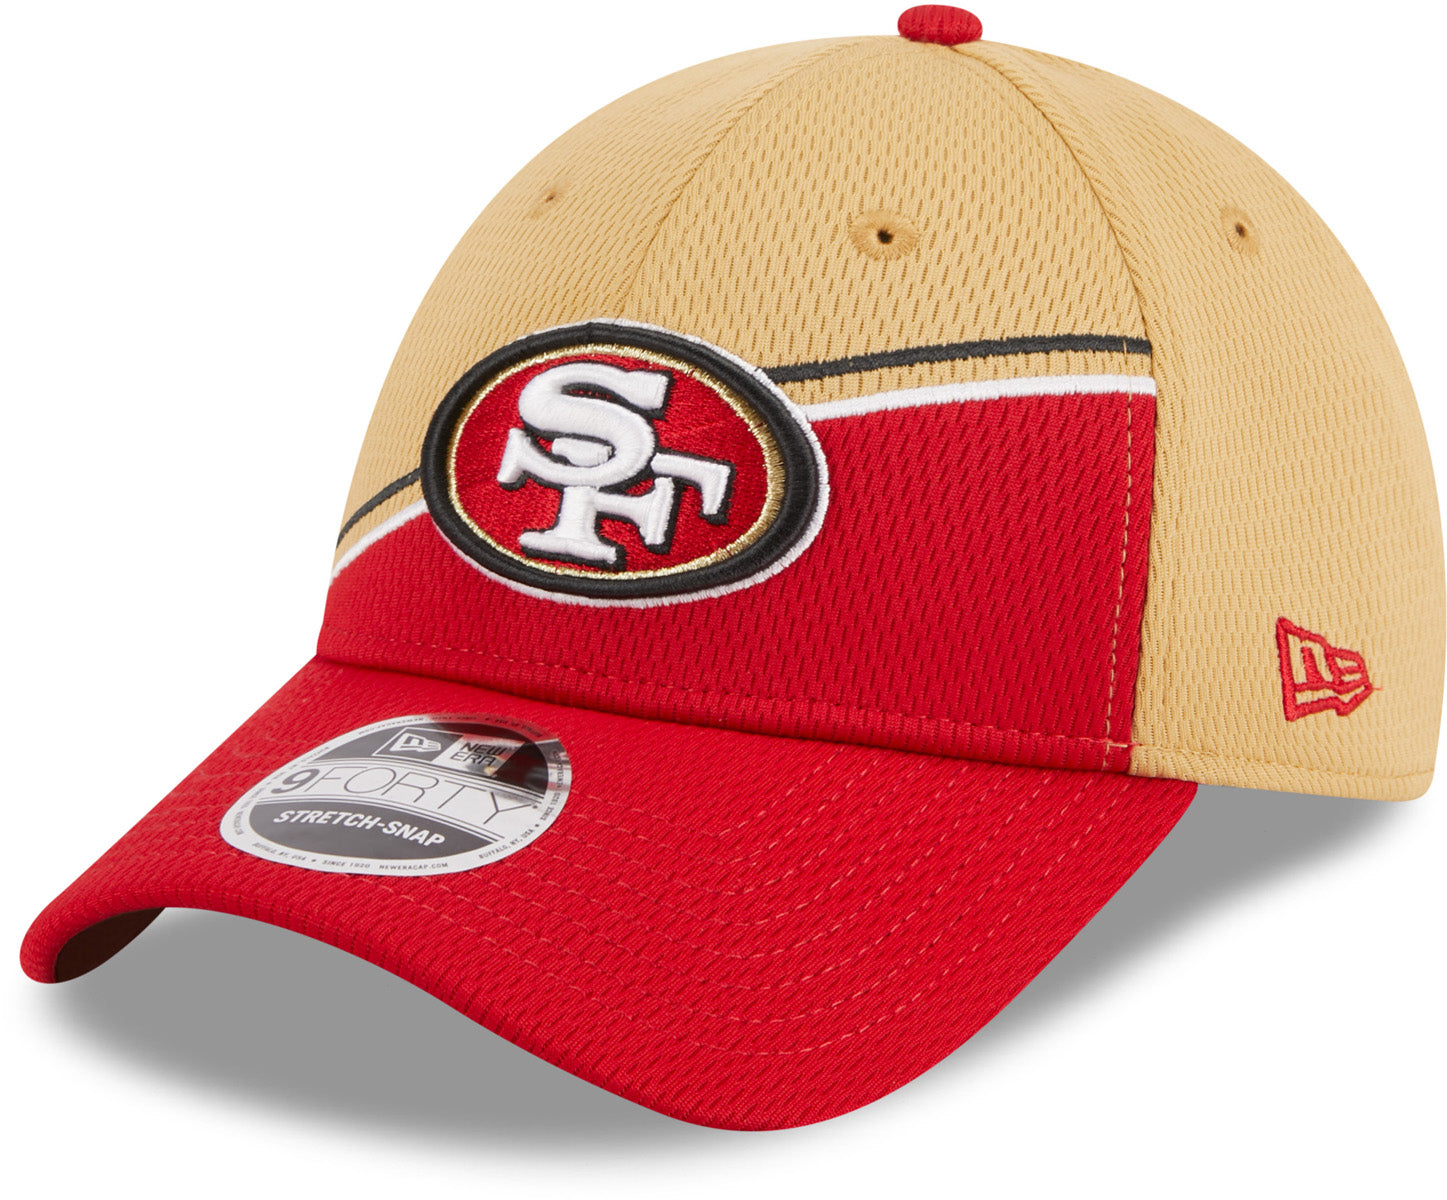 San Francisco 49ers Hats, 49ers Snapbacks, Sideline Caps